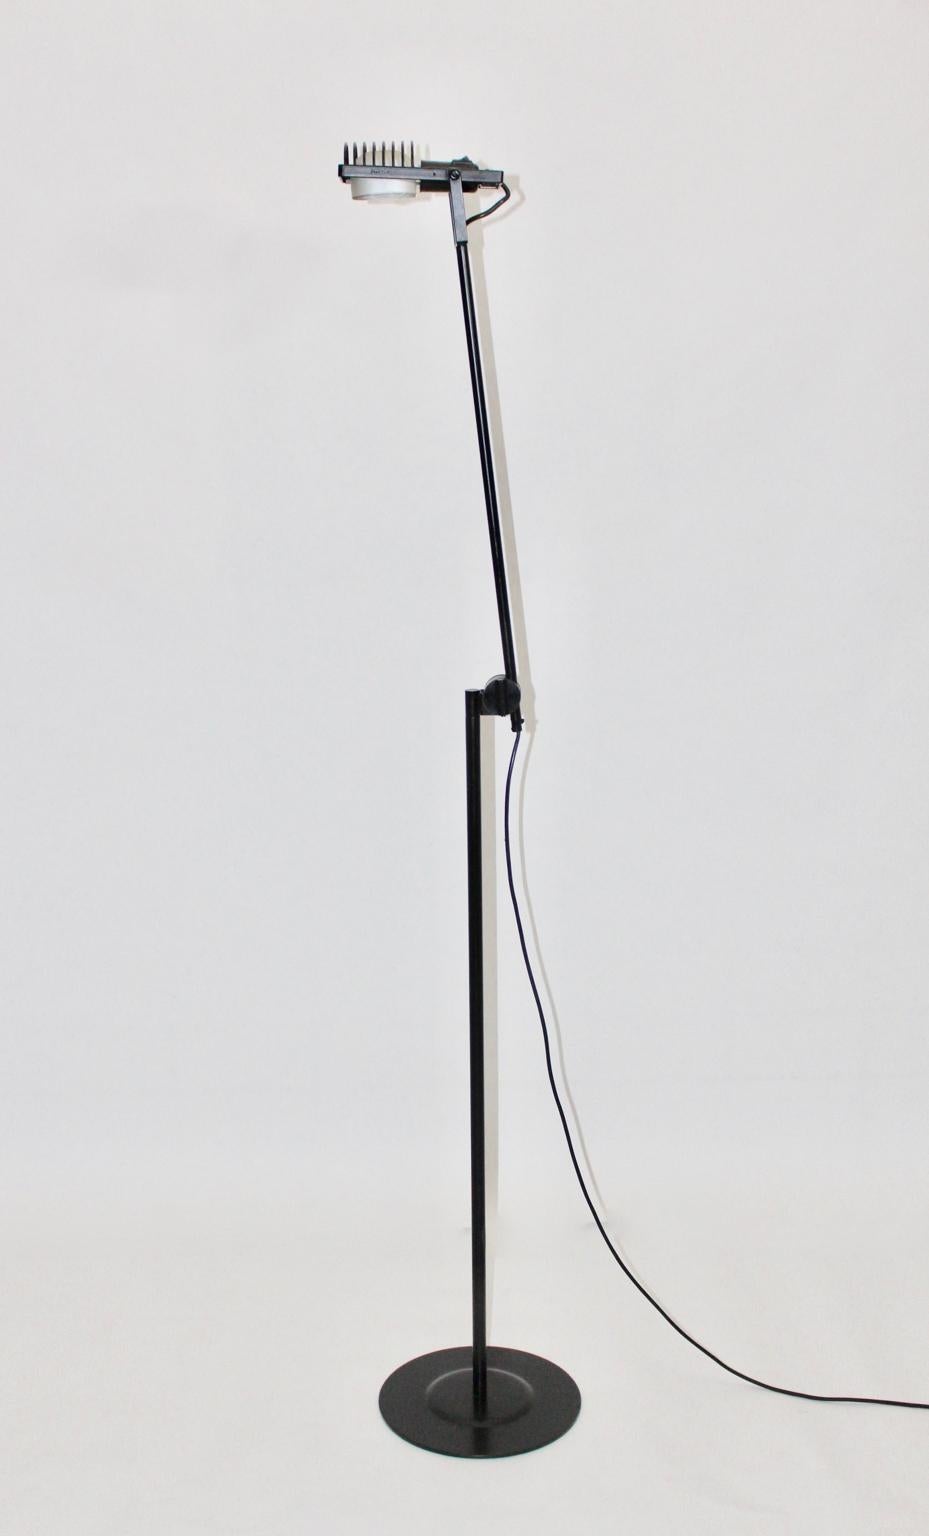 Late 20th Century Black Floor Lamp by Ernesto Gismondi 1970 for Artemide Italy Metal, Plastic